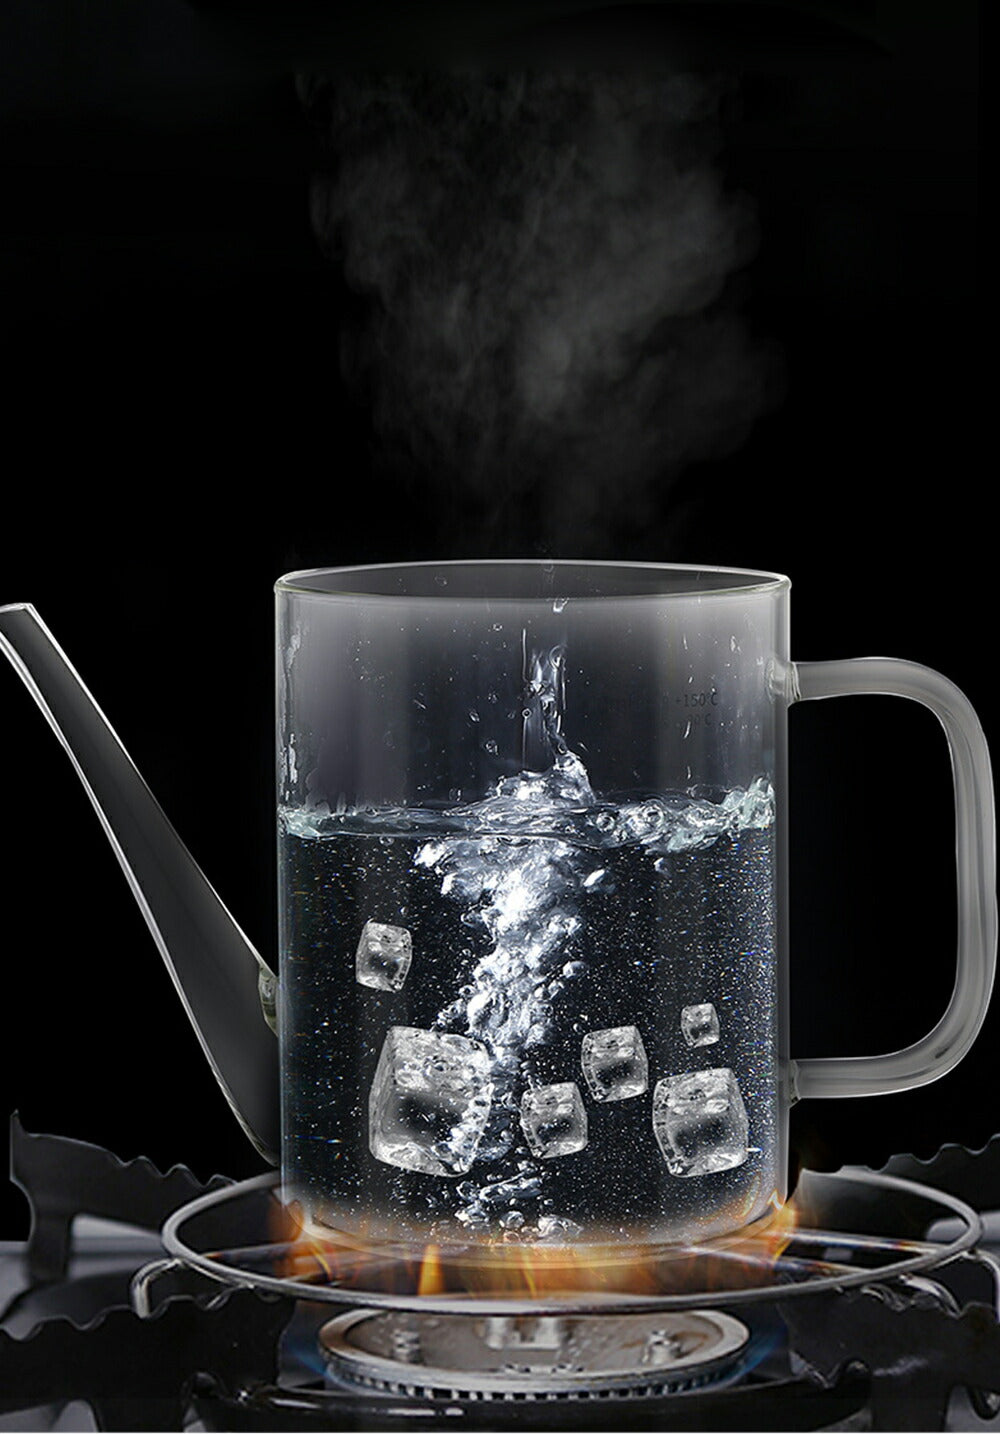 IwaiLoft 直火可 新型 日本初 オイルポット 耐熱ガラス 油こし器 1500ml 1000ml 大容量 目盛り付き オイルフィルター –  茶器・コーヒー用品を選ぶ - IwaiLoft